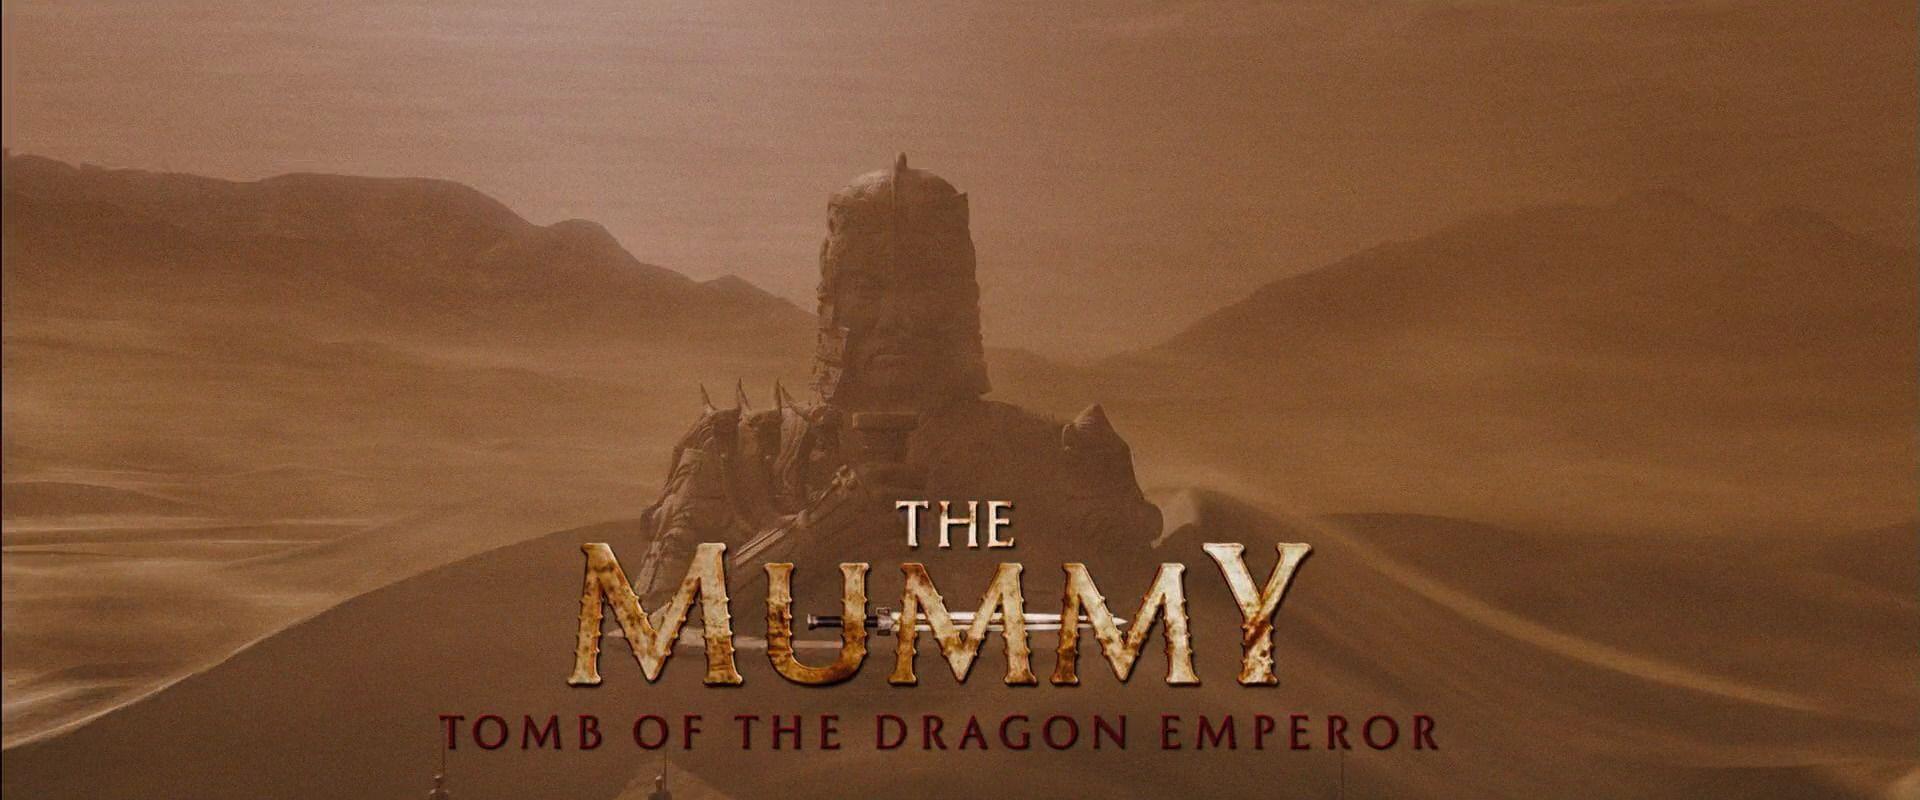 Mummy Movie Logo - The Mummy: Tomb of the Dragon Emperor (2008) Screencaps.com